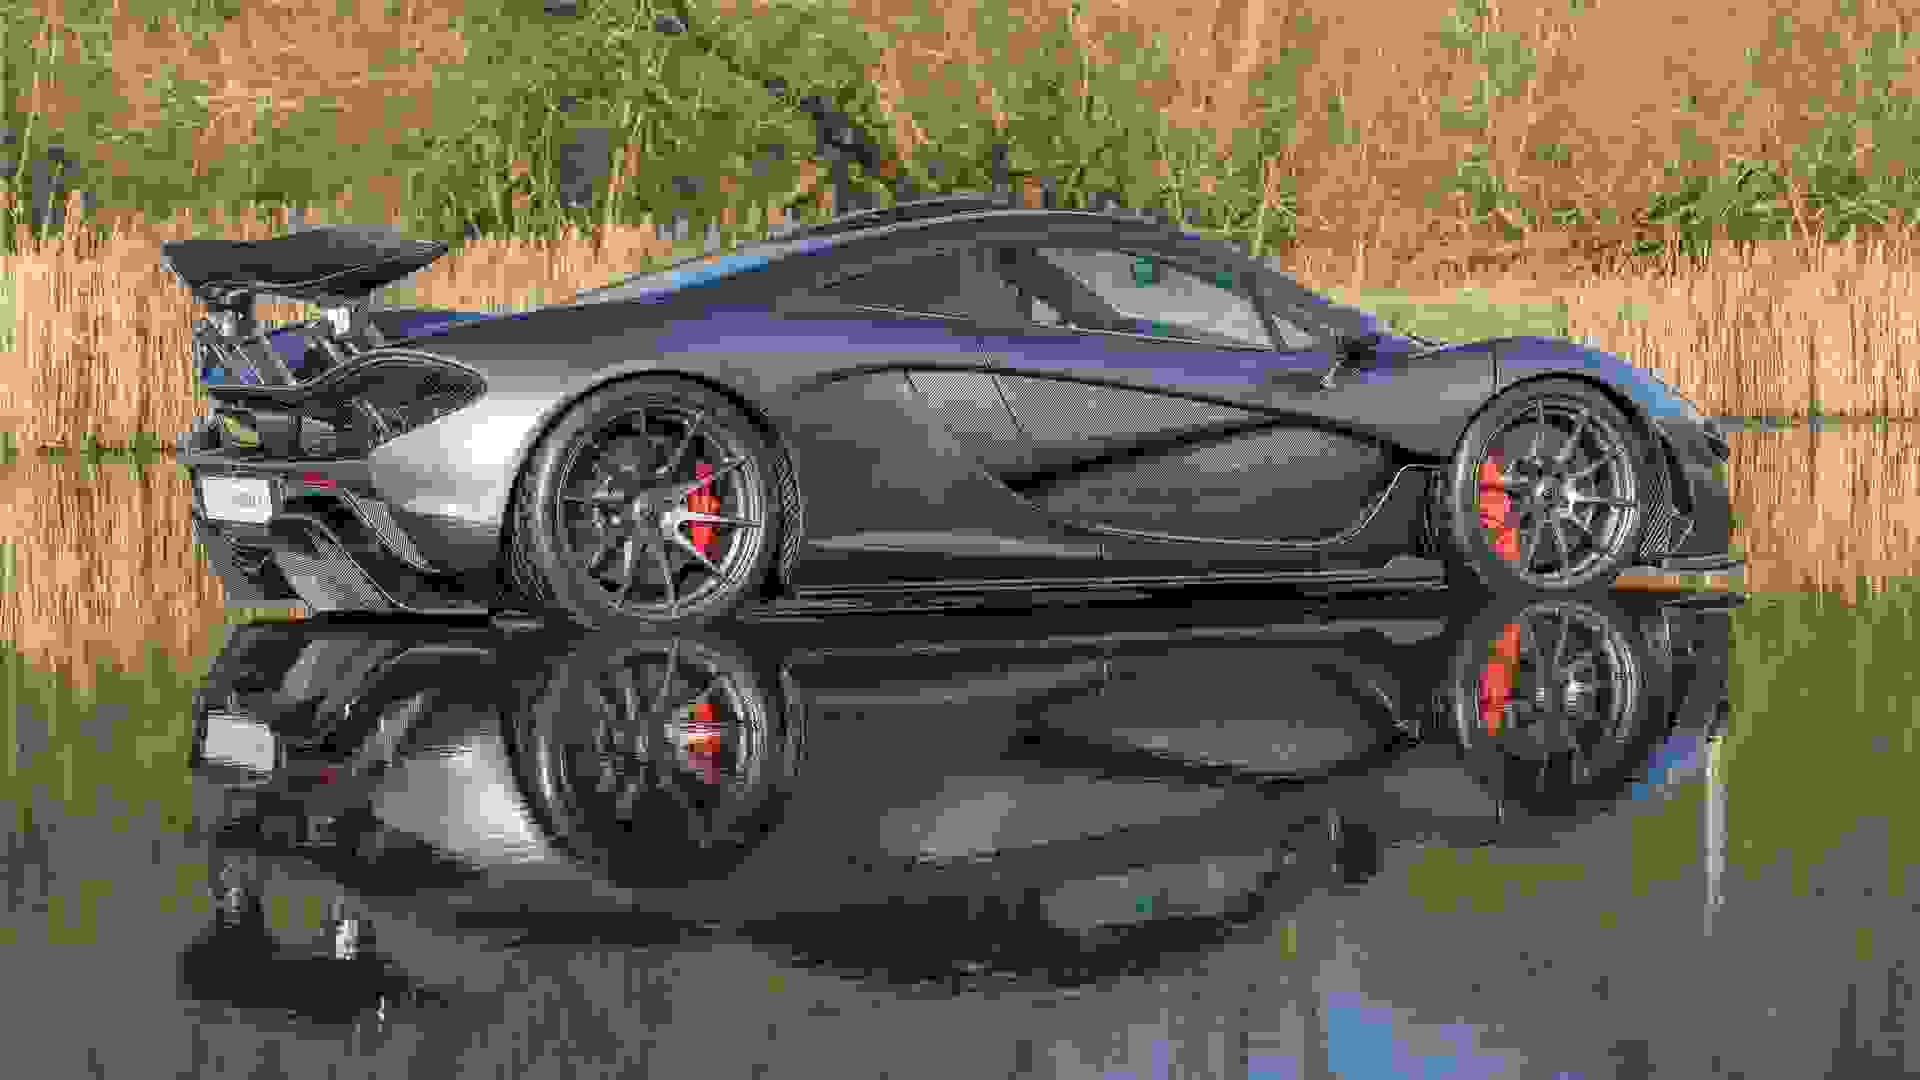 McLaren P1 Photo 7f695561-96e1-4755-a827-c2517745d1fc.jpg